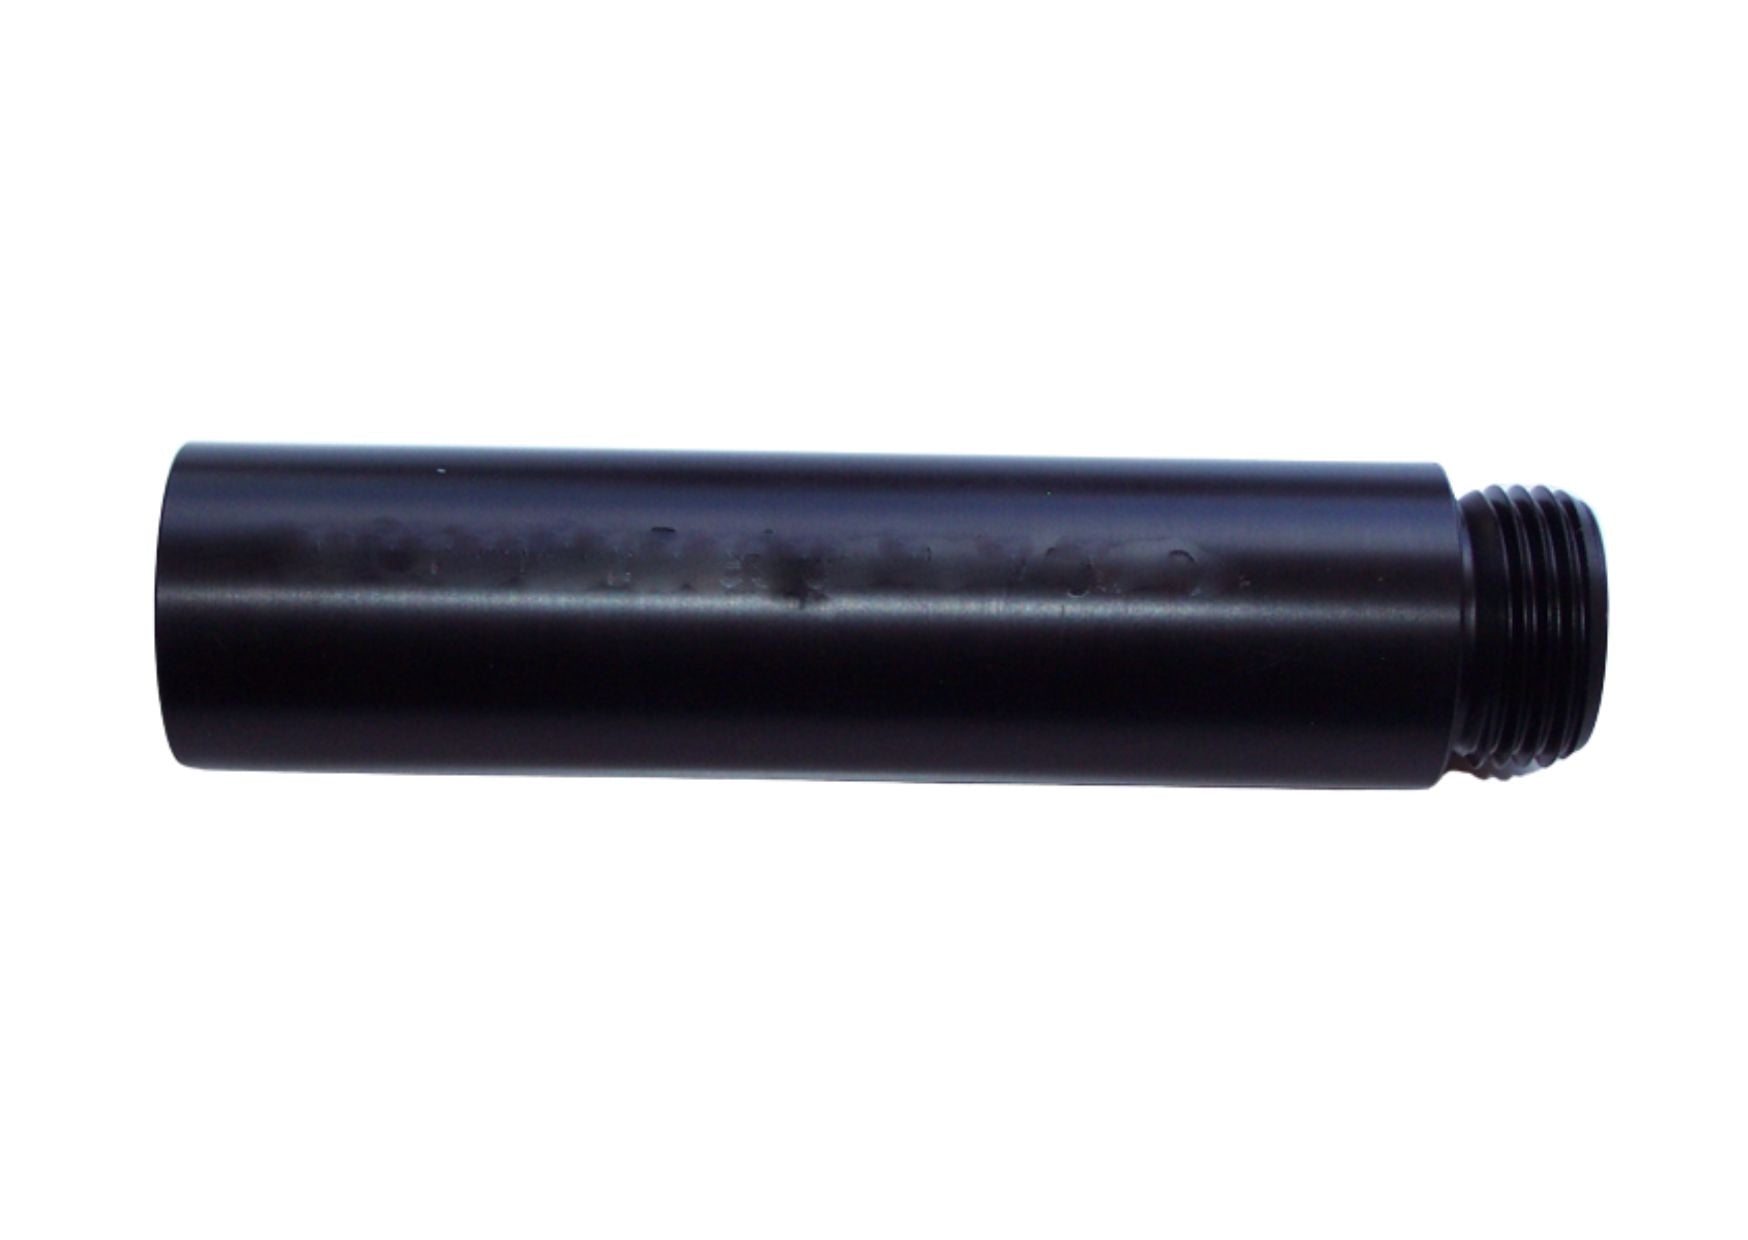 Hydro aspirator extension, stainless steel, black, 12.7 cm